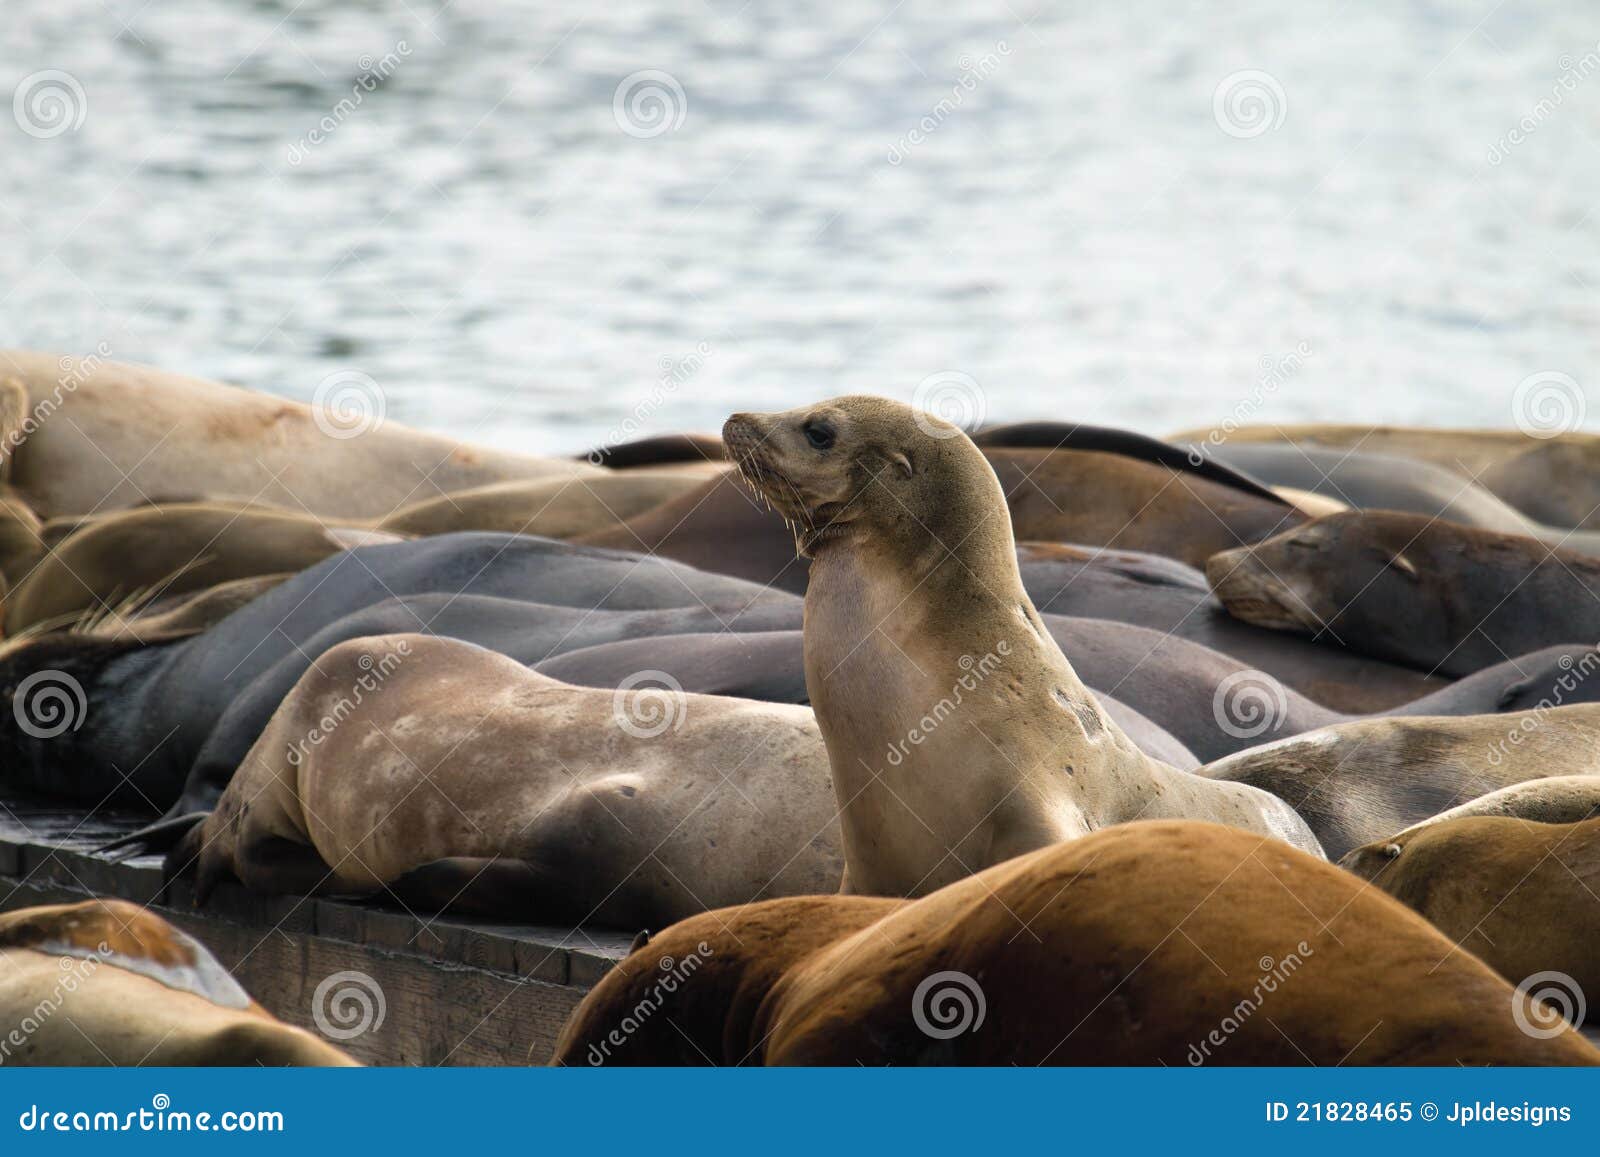 sea lions sunning barge pier 39 san francisco